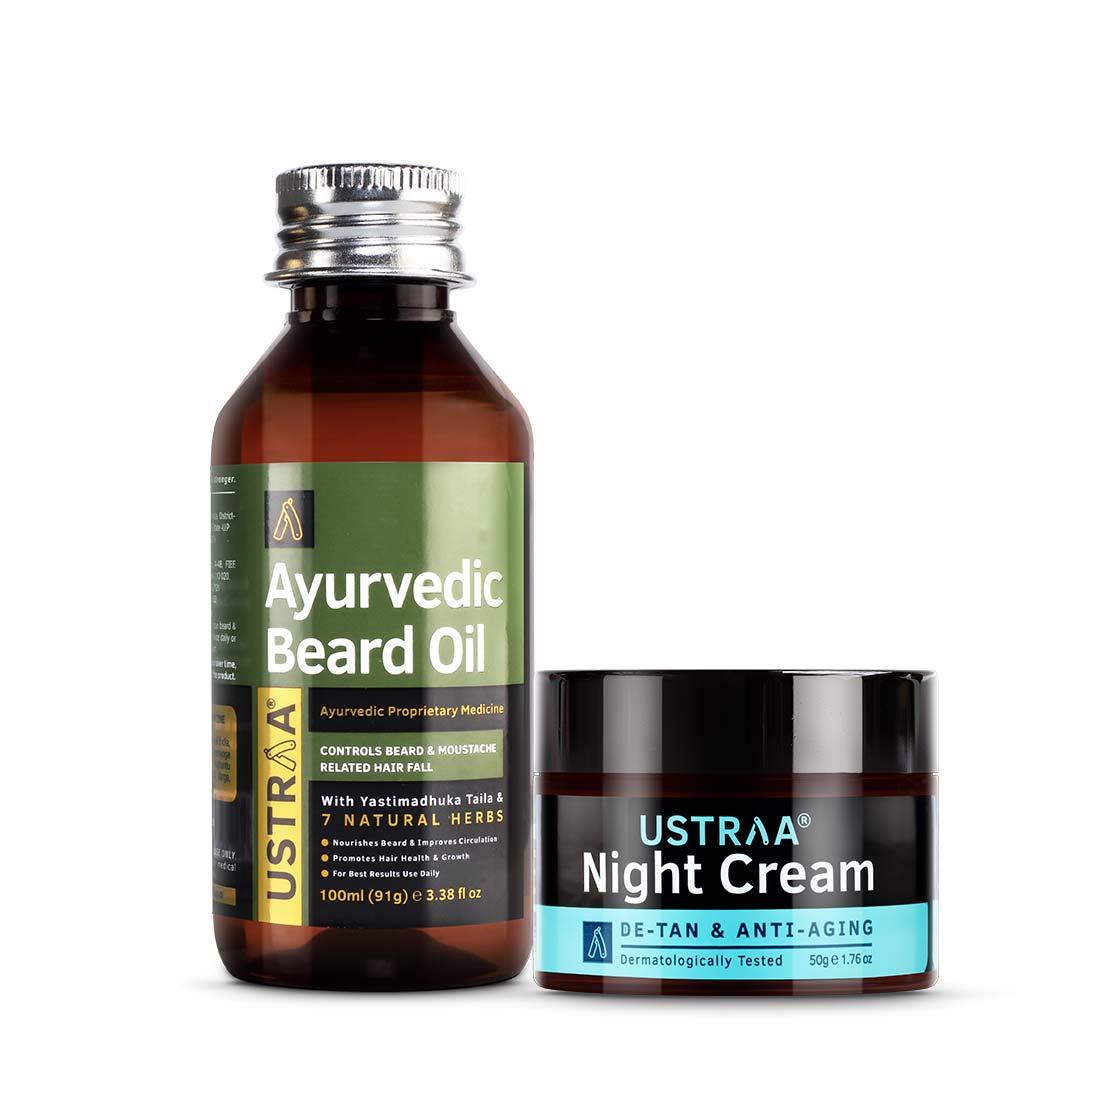 Ayurvedic Beard Oil & Night Cream